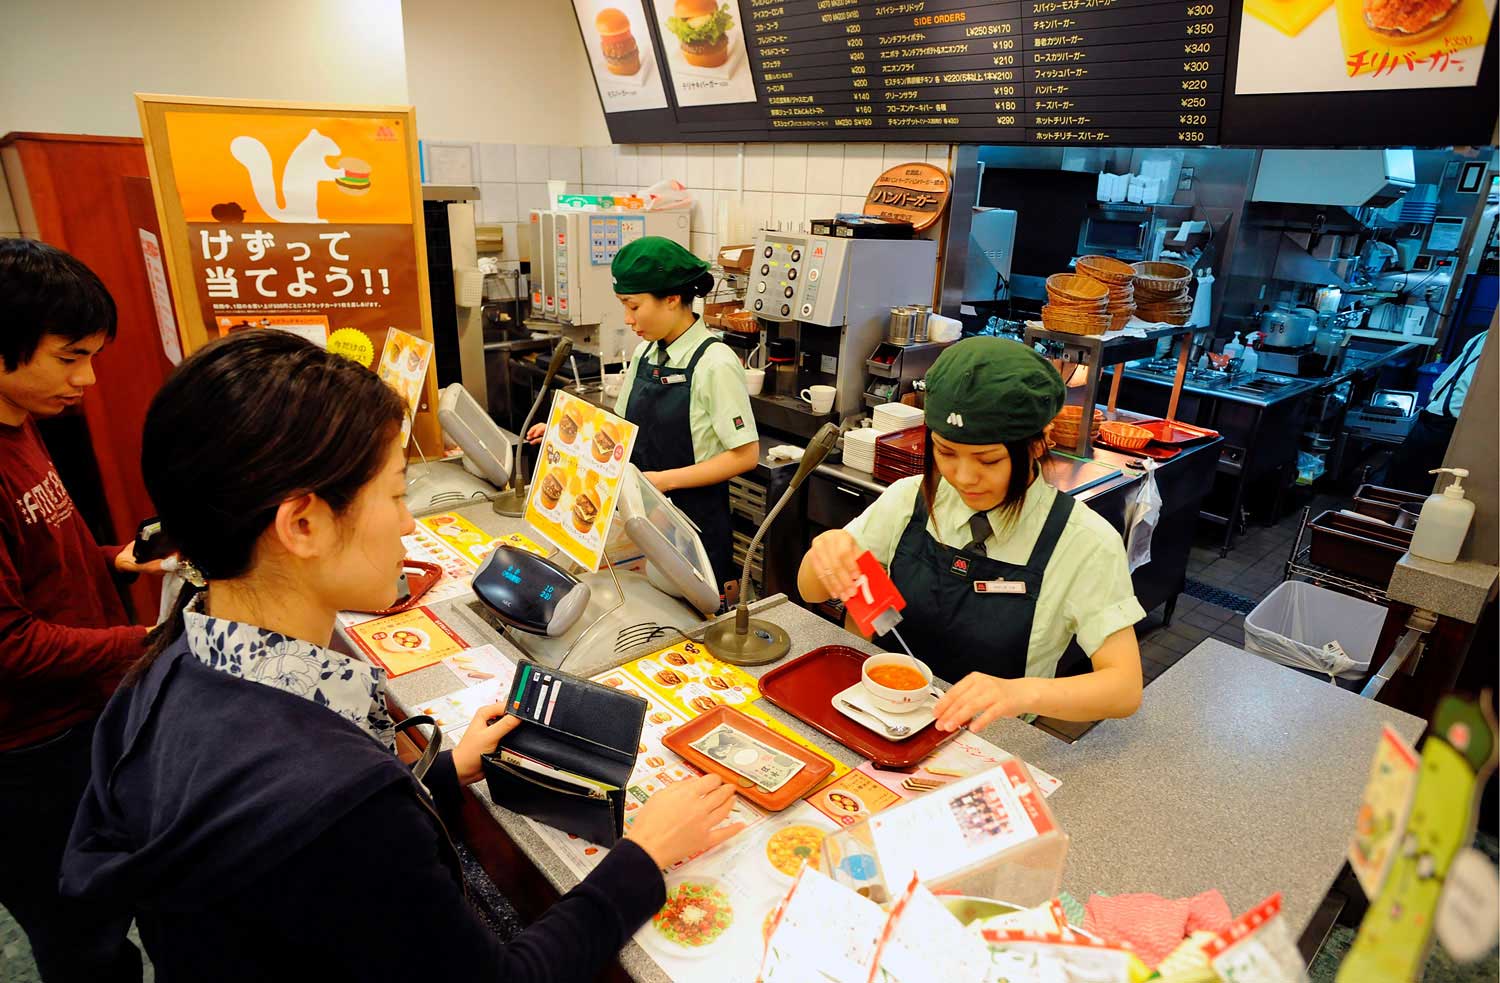 Japan - Fast Food - Mos Food Services - Hamburger Chain